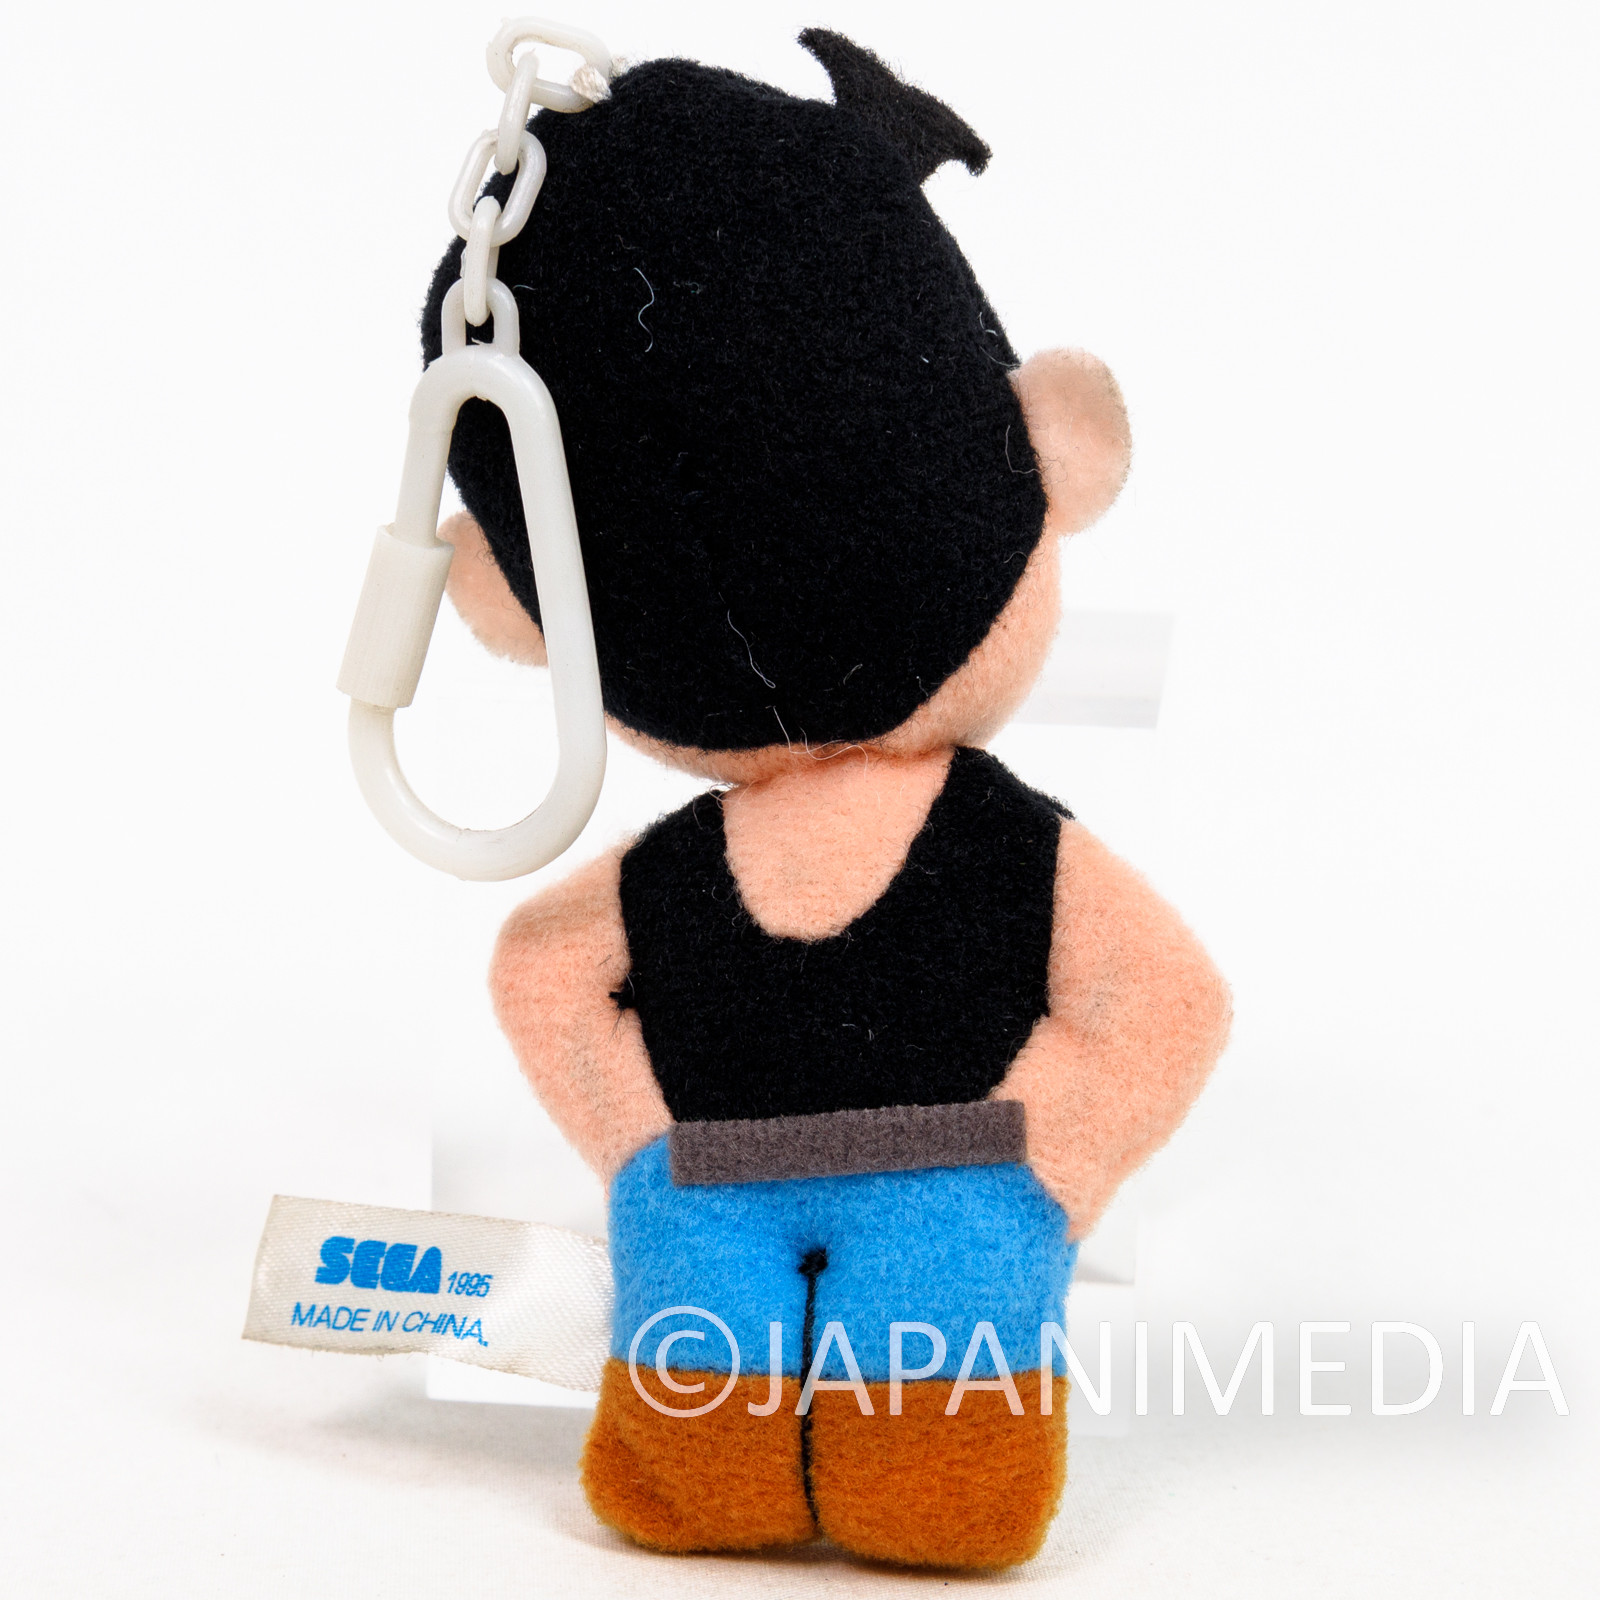 Ninku Aicho Plush Doll Keychain JAPAN ANIME SHONEN JUMP JAPANIMEDIA